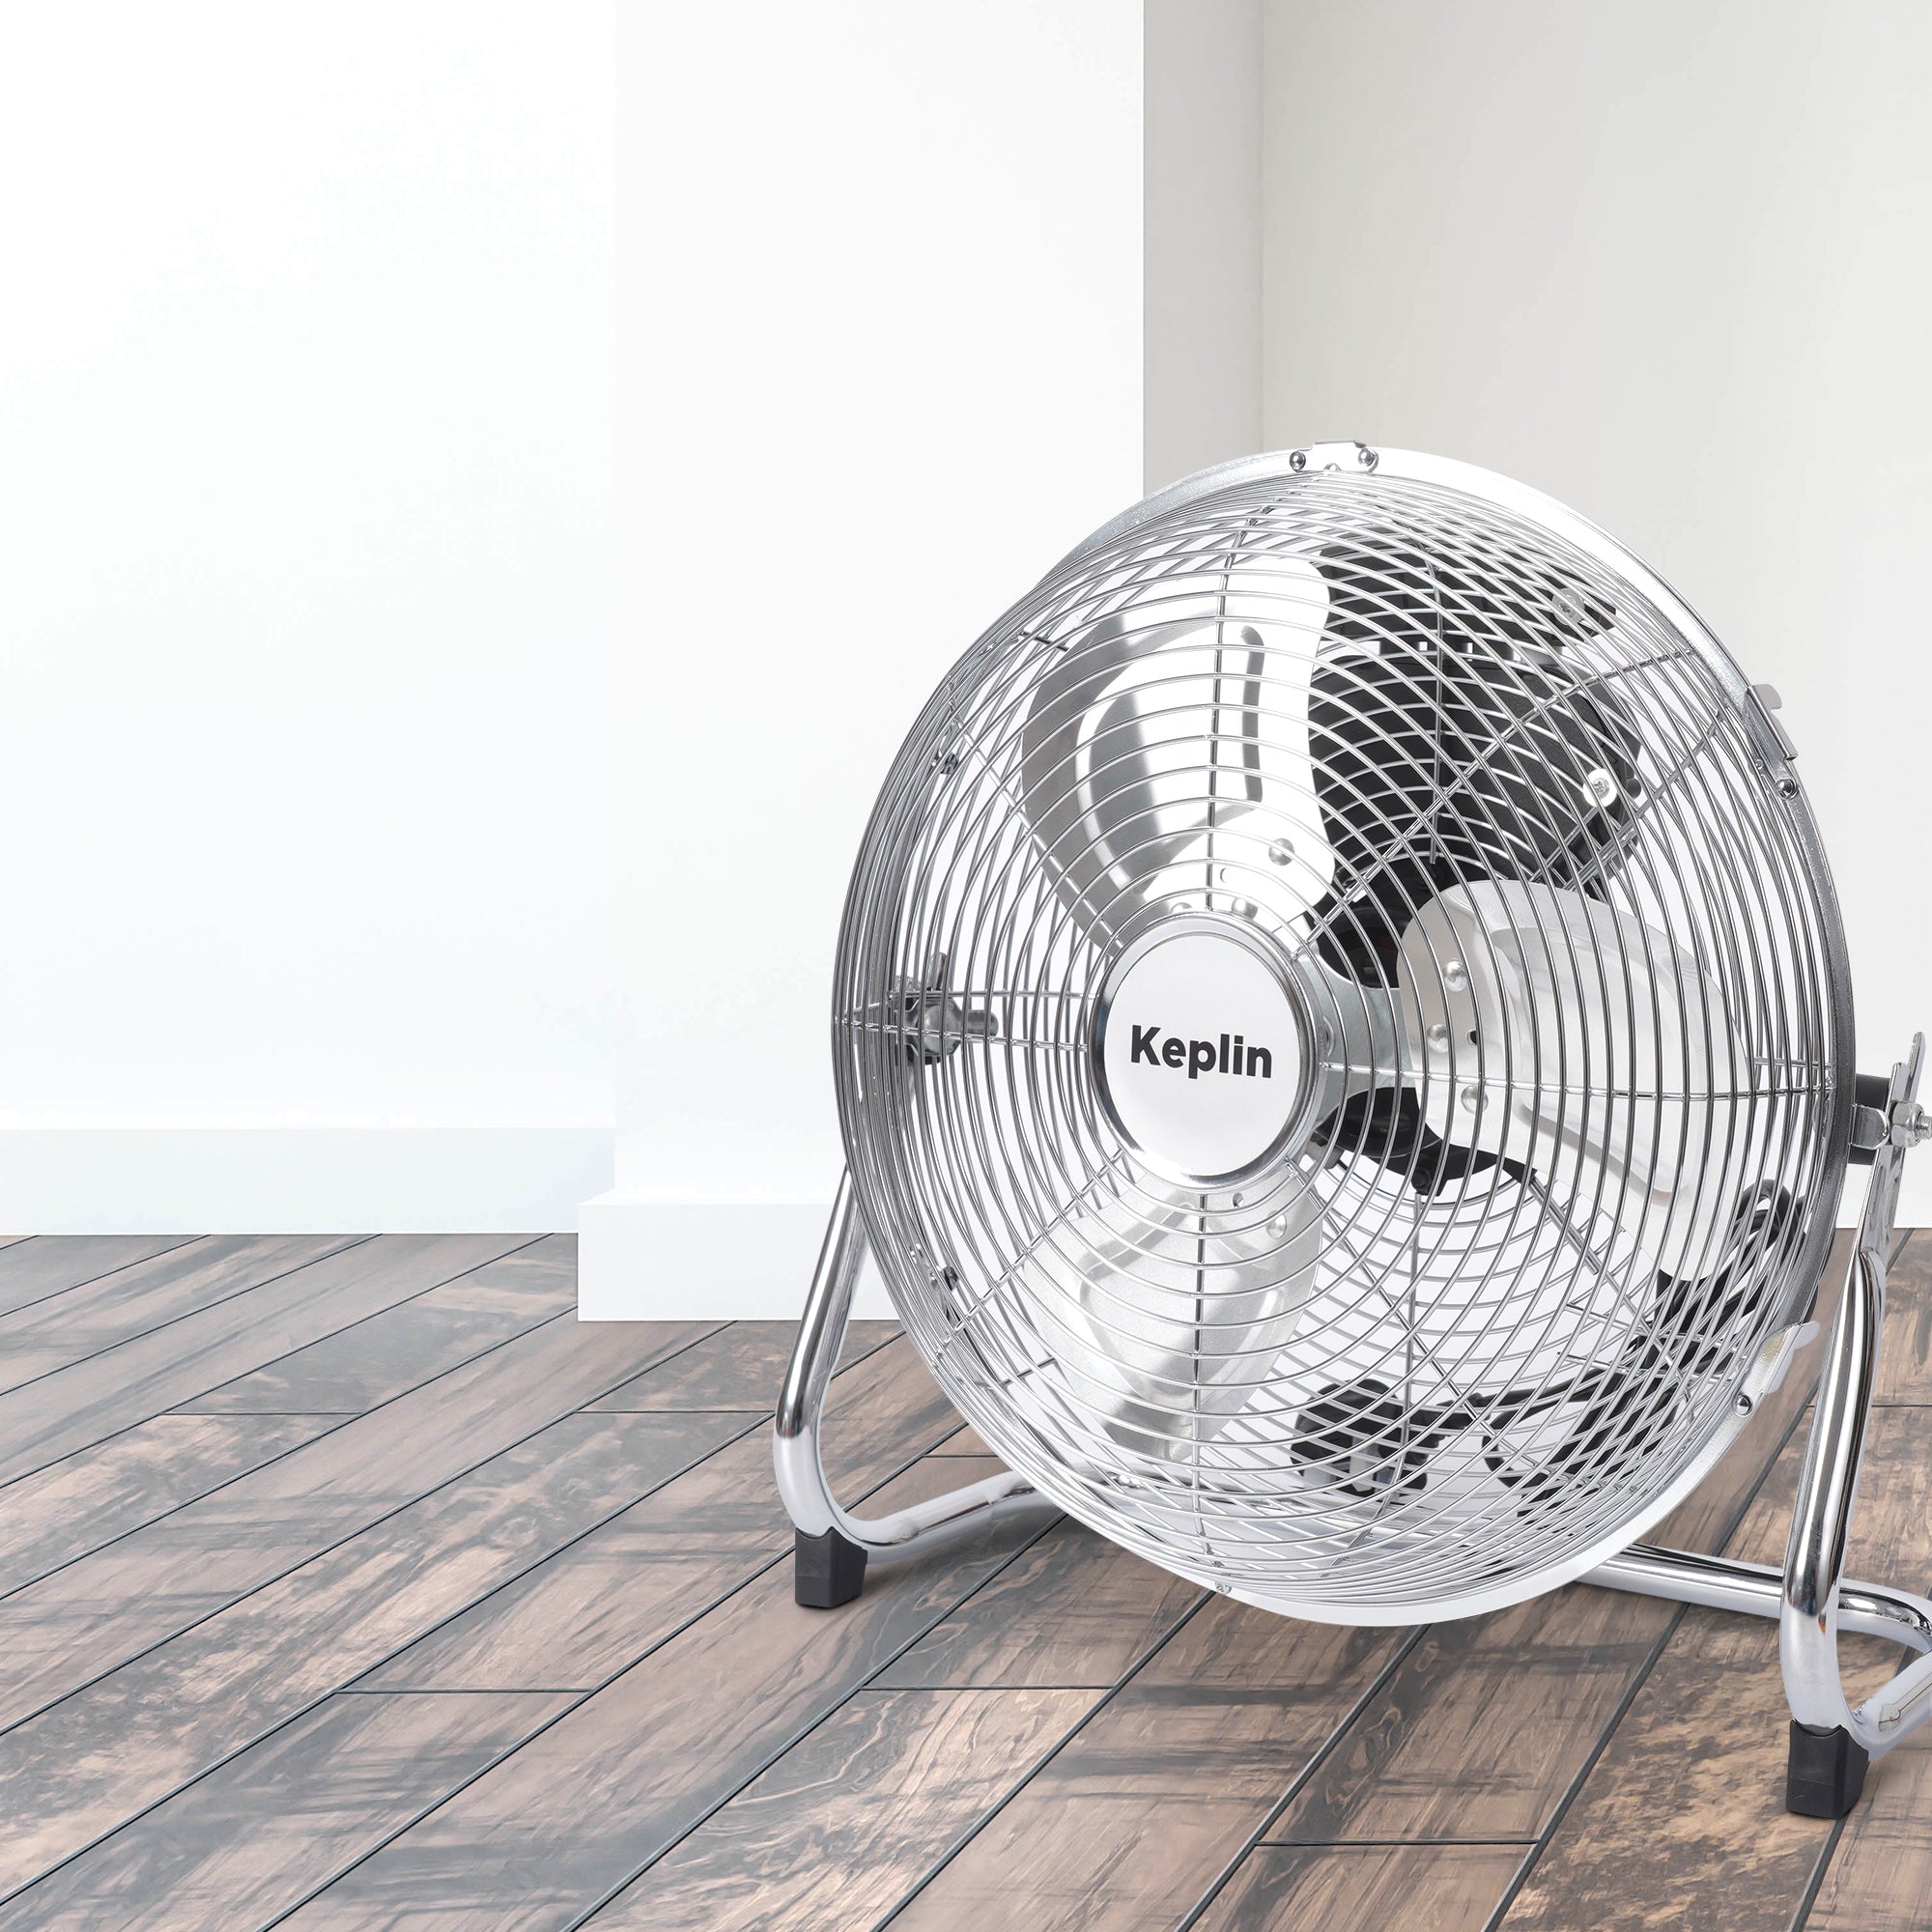 Heavy Duty Chrome Floor Fan with 3 Speeds - Adjustable Fan Head and Powerful Circulation